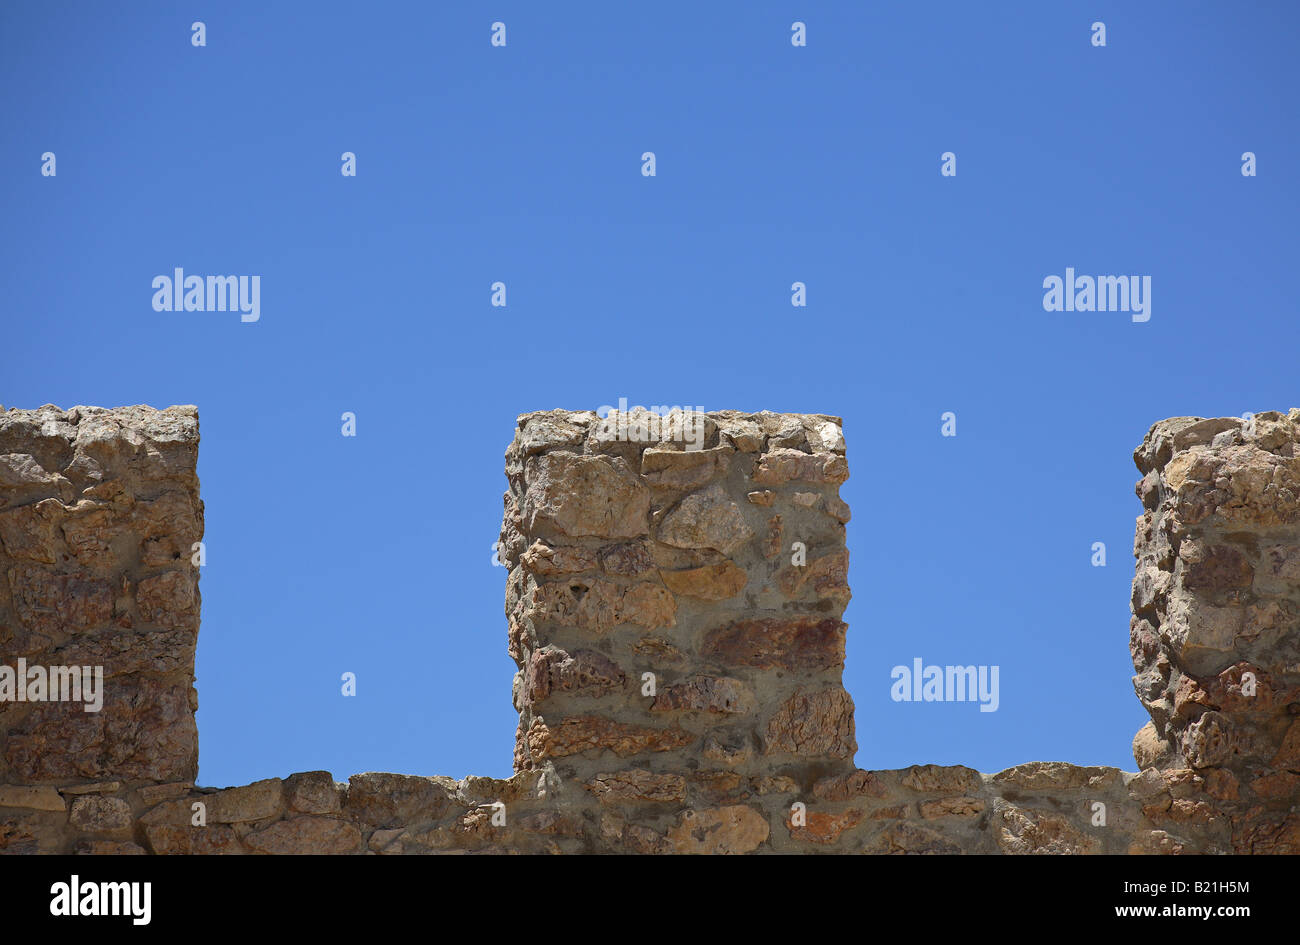 A stone wall at Fortaleza de Sagres, Sagres, Algarve, Portugal Stock Photo